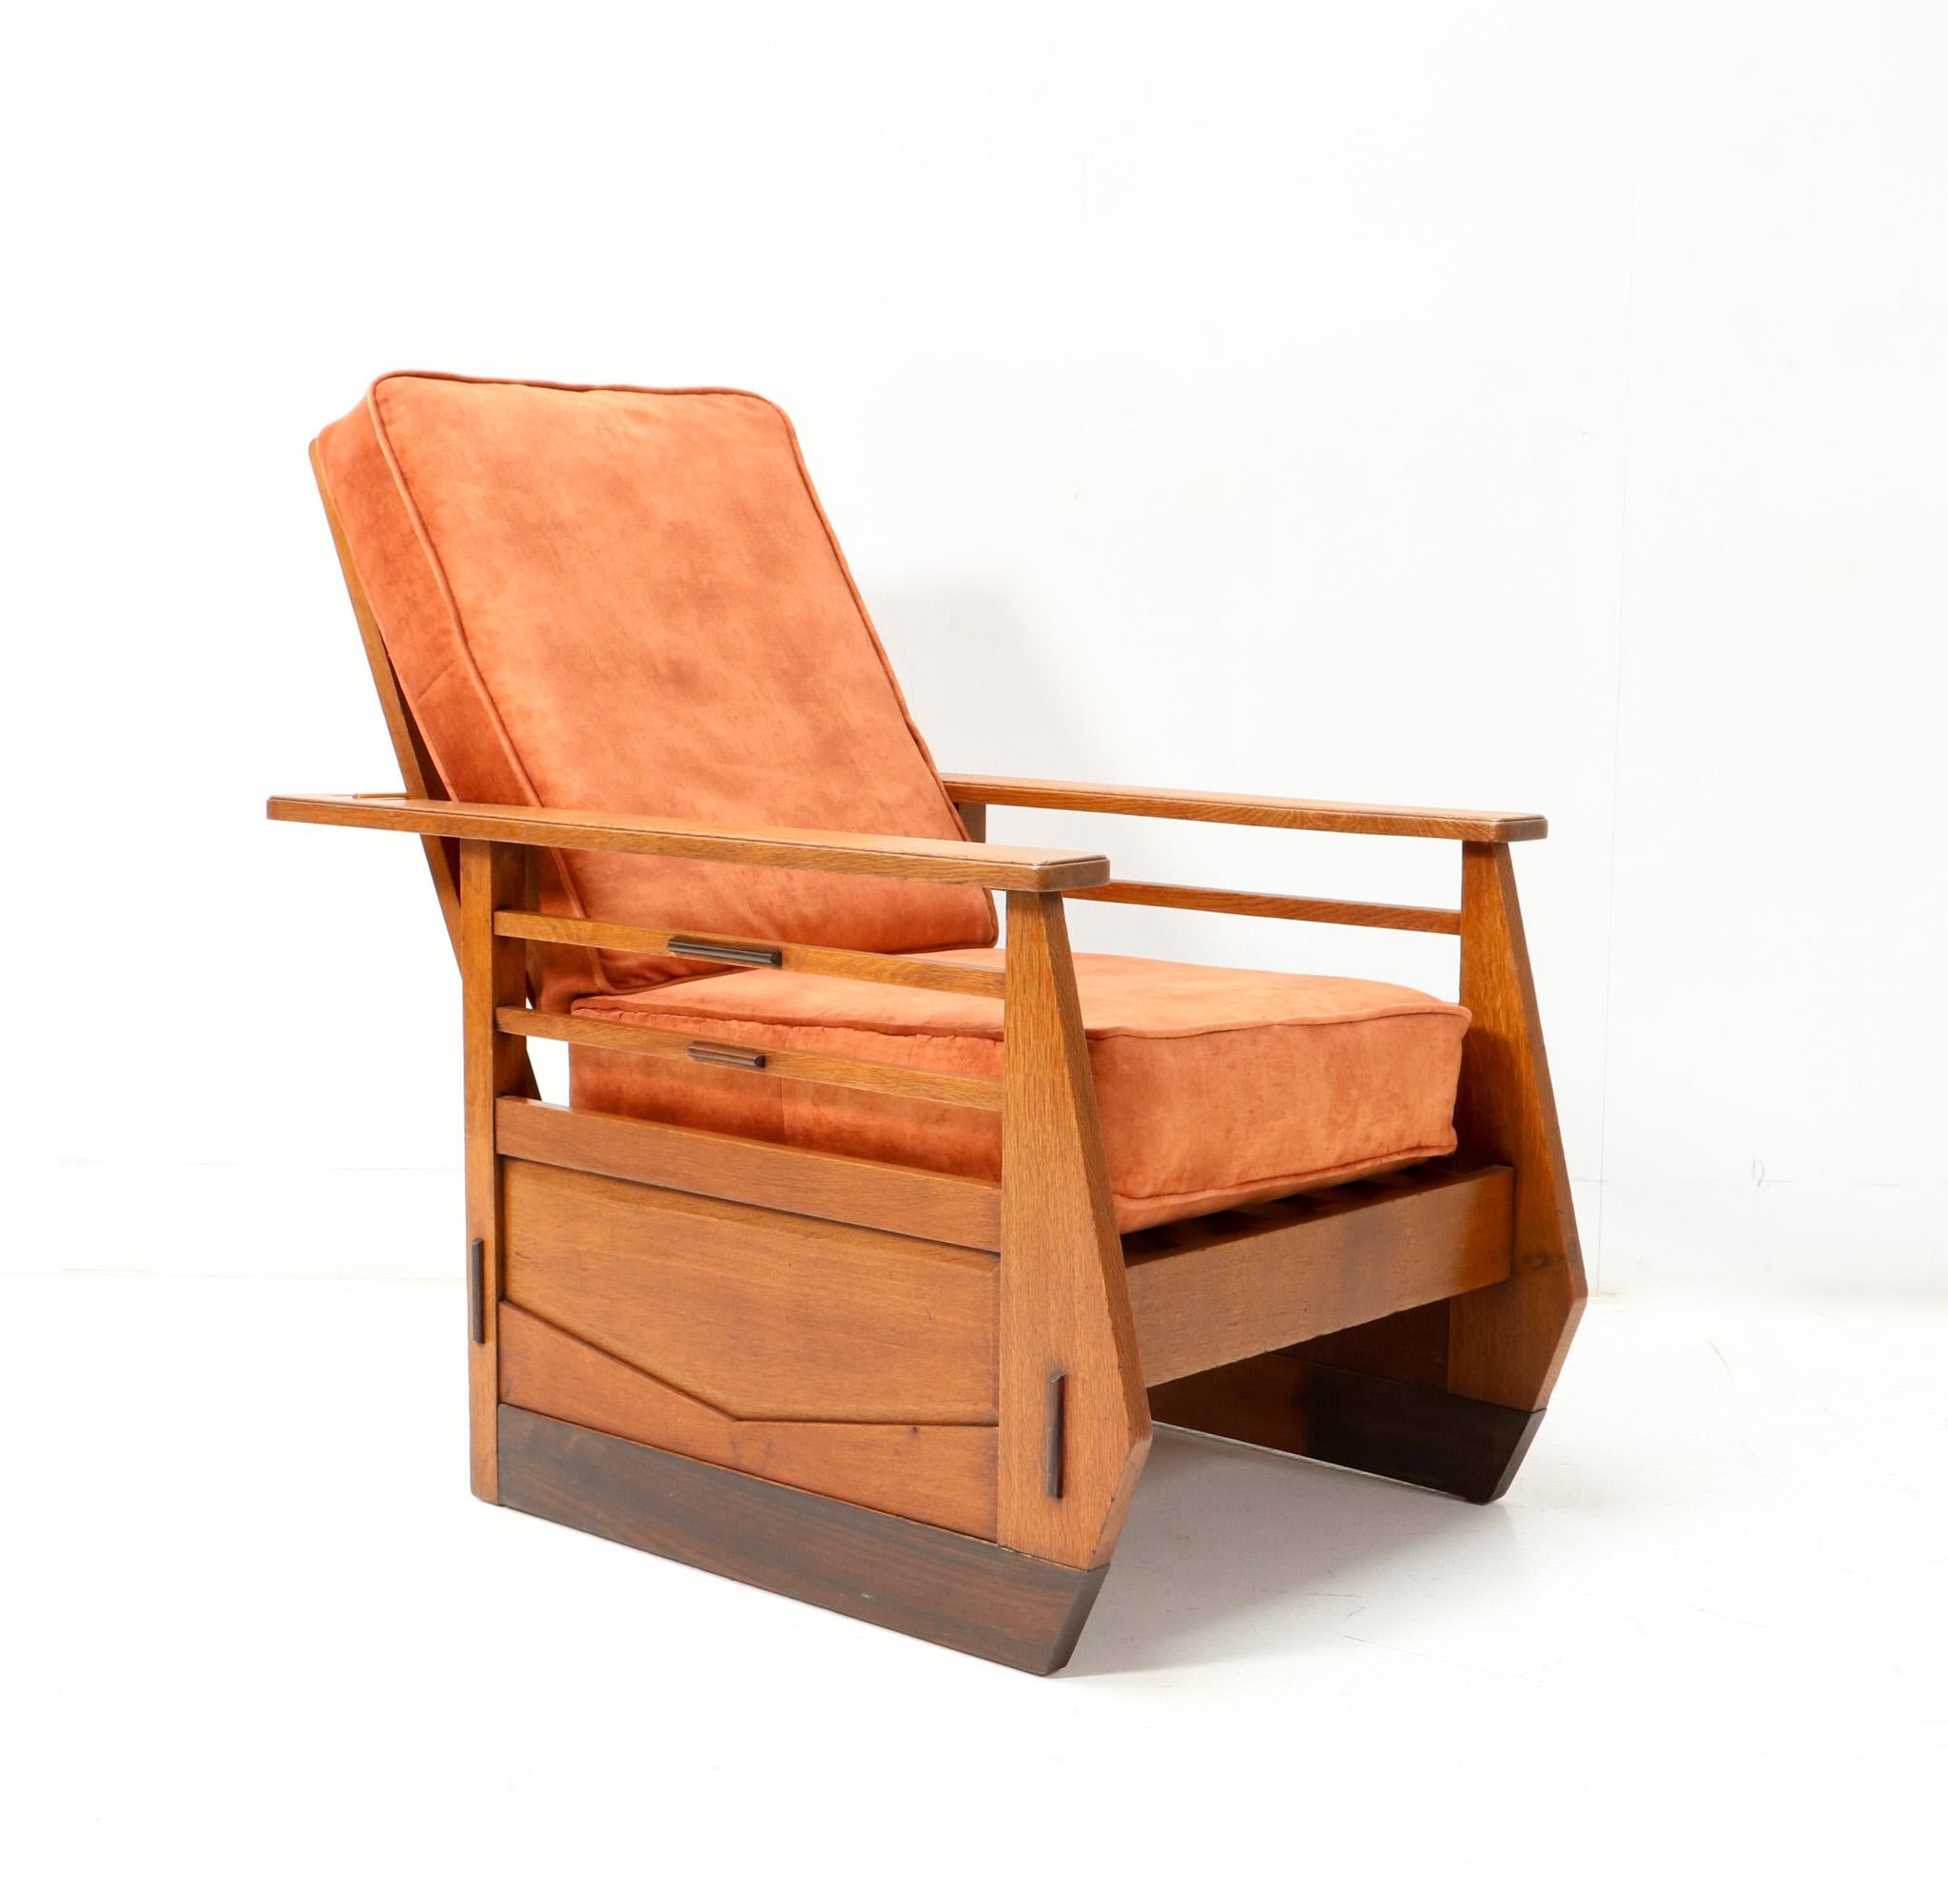 Oak Art Deco Amsterdamse School Lounge Chair or Folding Chair, 1920s For Sale 1